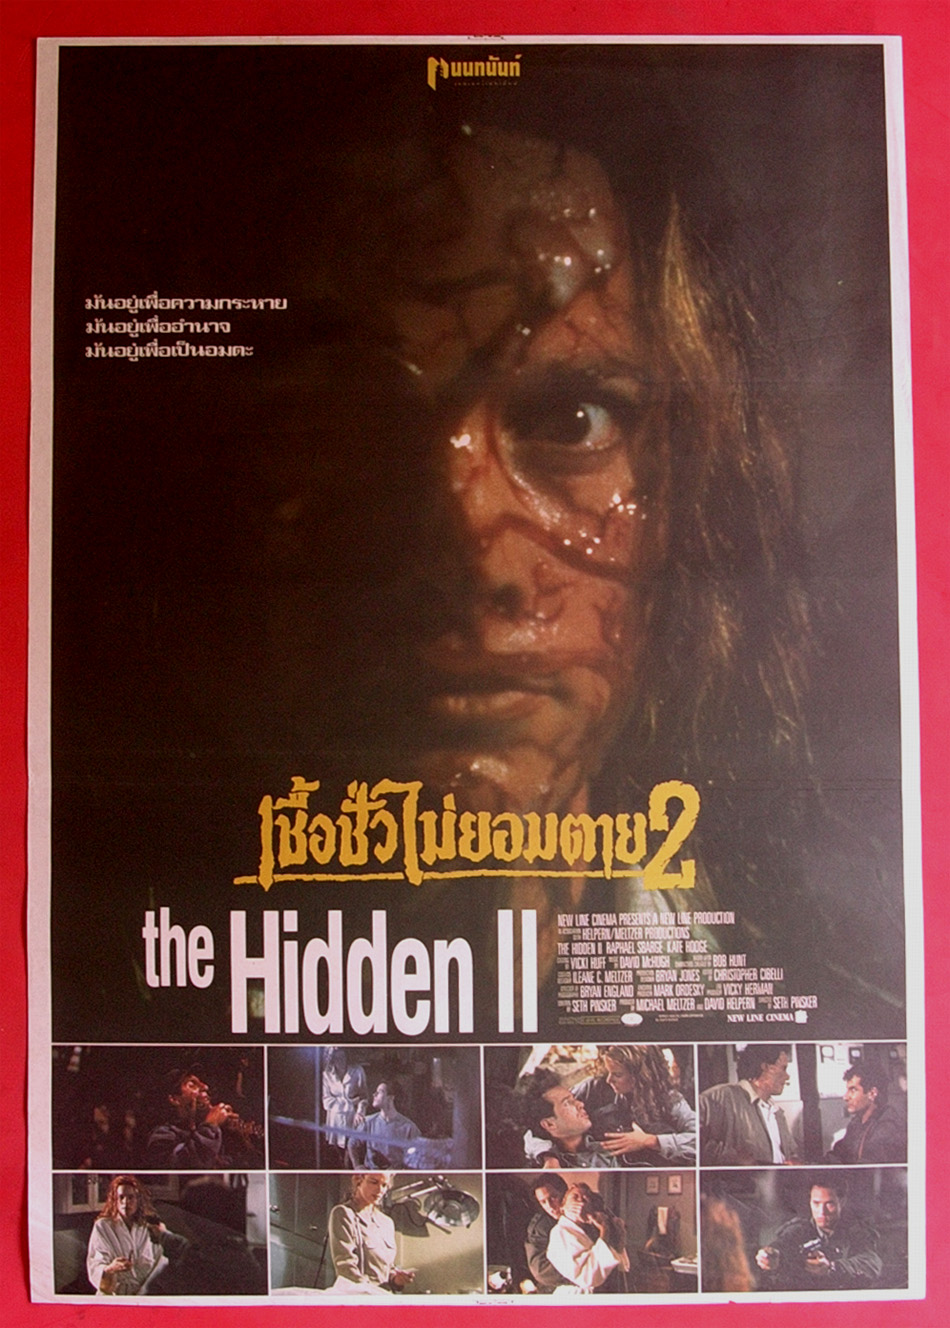 The Hidden II (1993) Screenshot 5